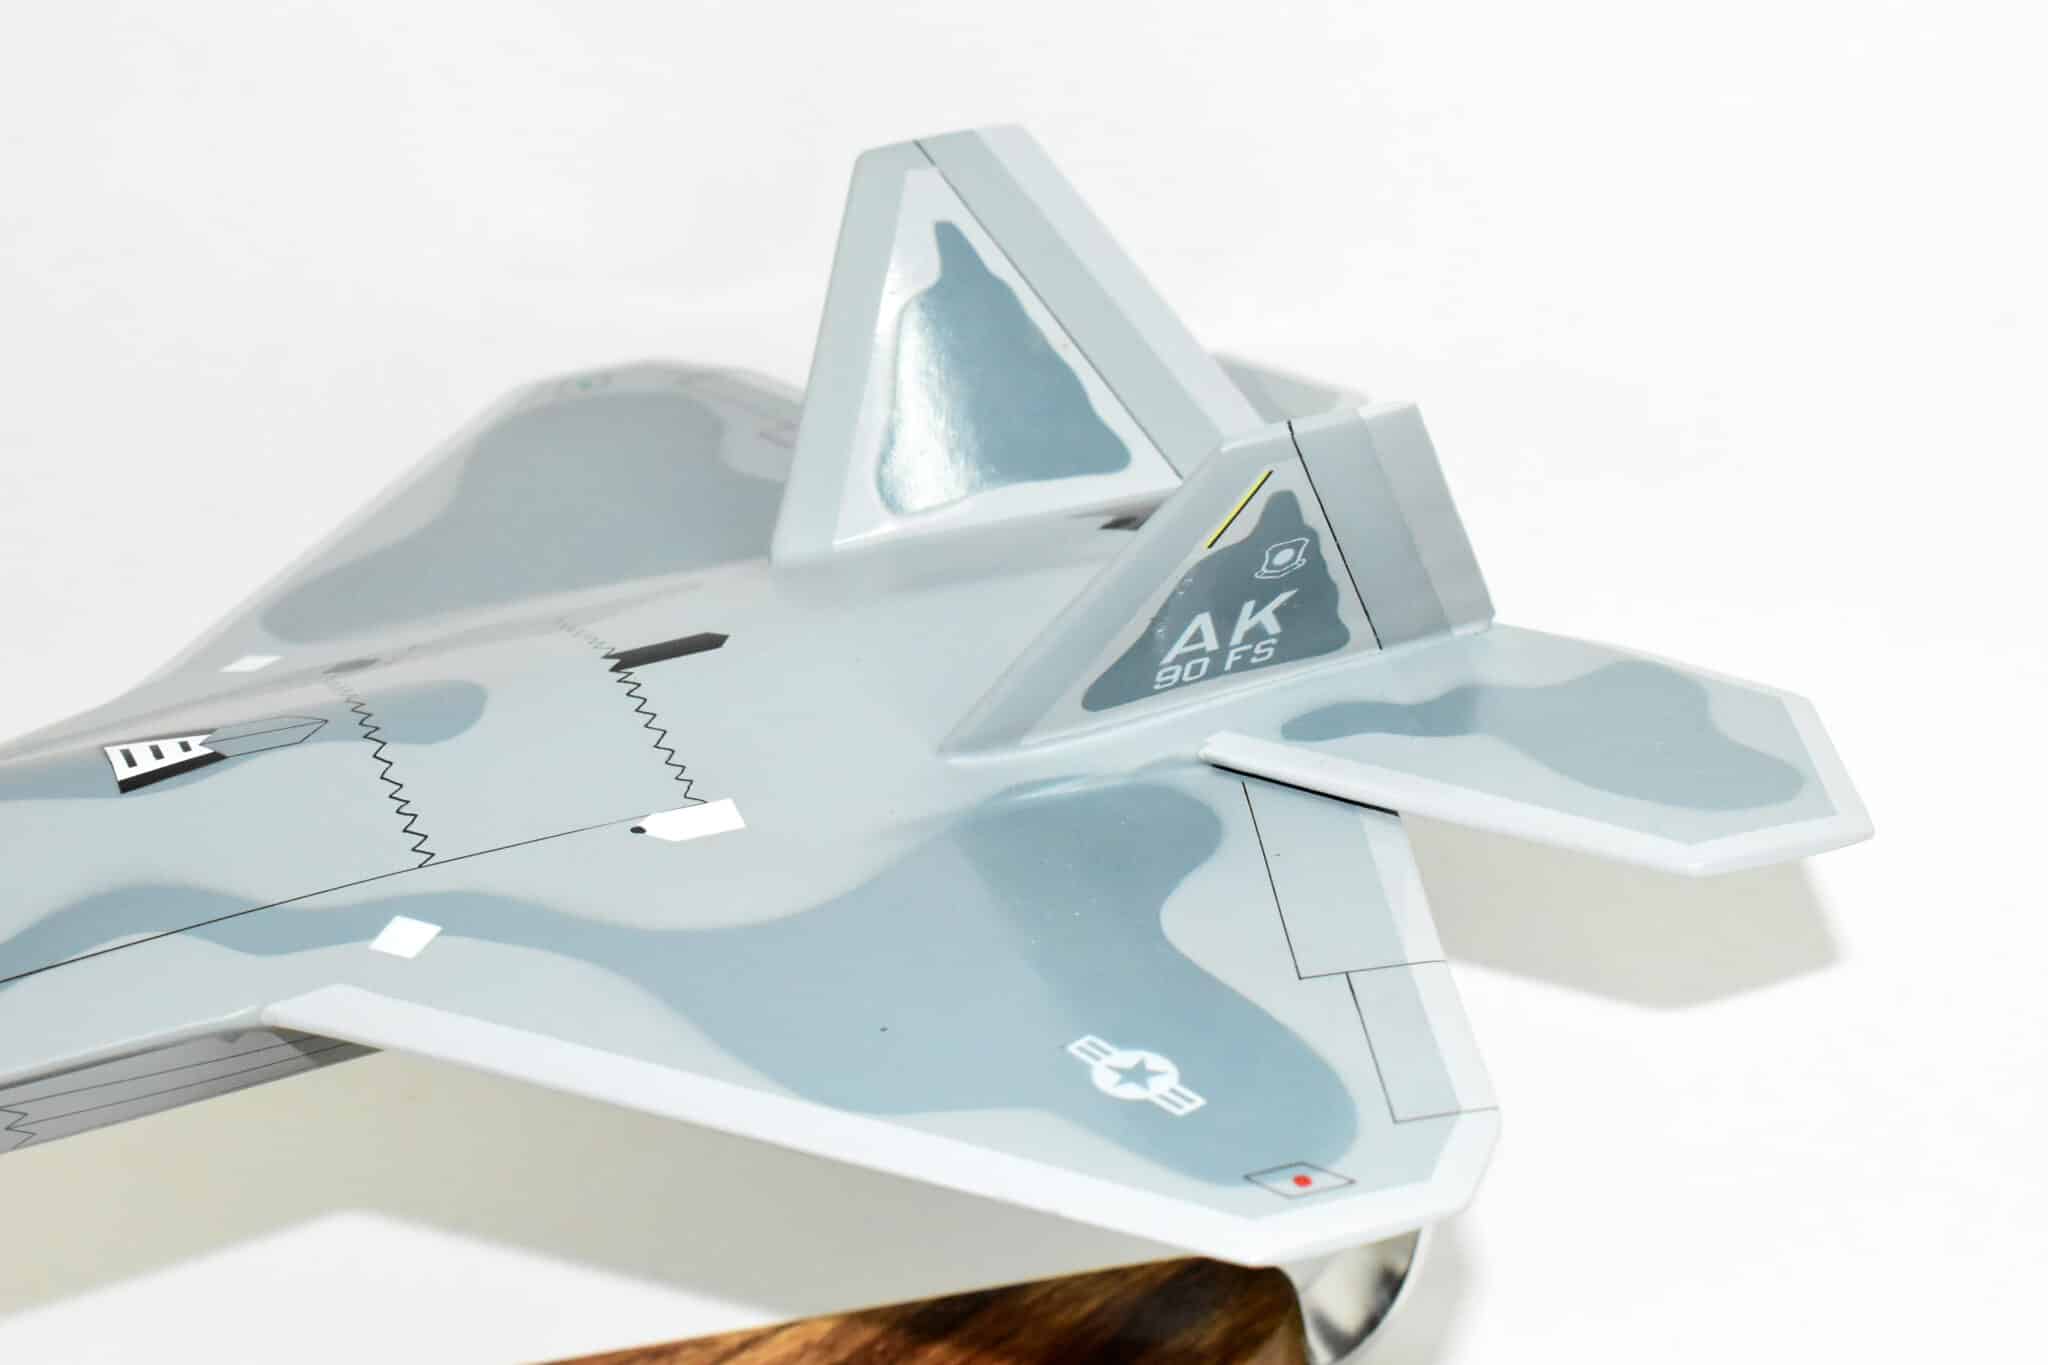 90th FS Dicemen F-22 Raptor Model